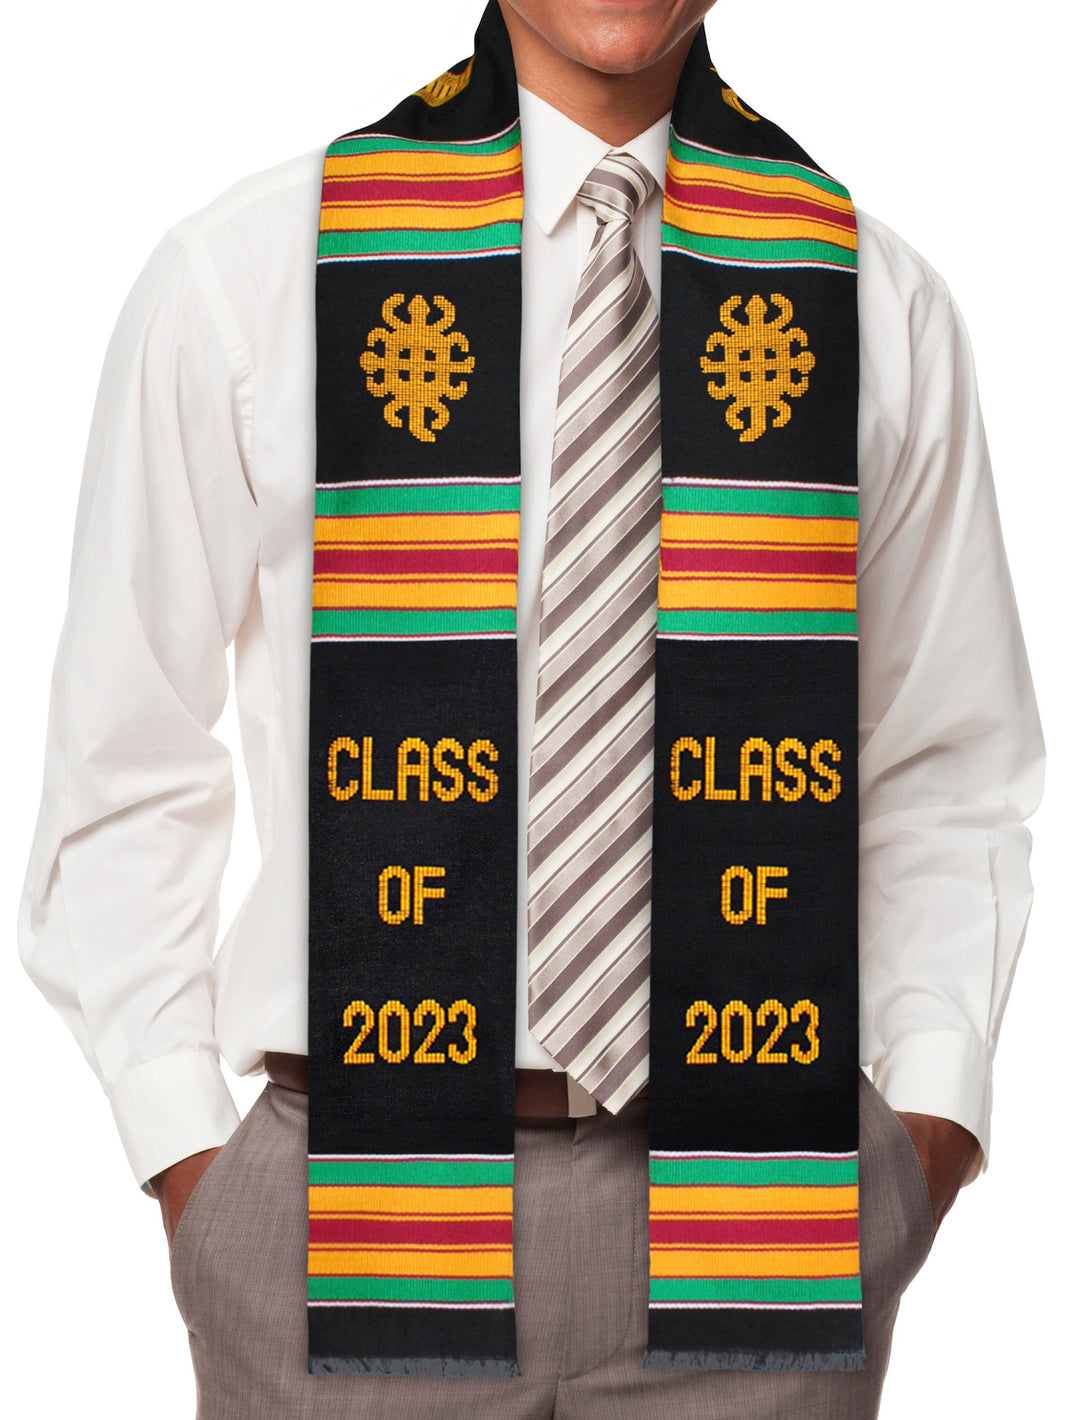 Class of 2023 Kente Graduation Stole with Diversity Symbol